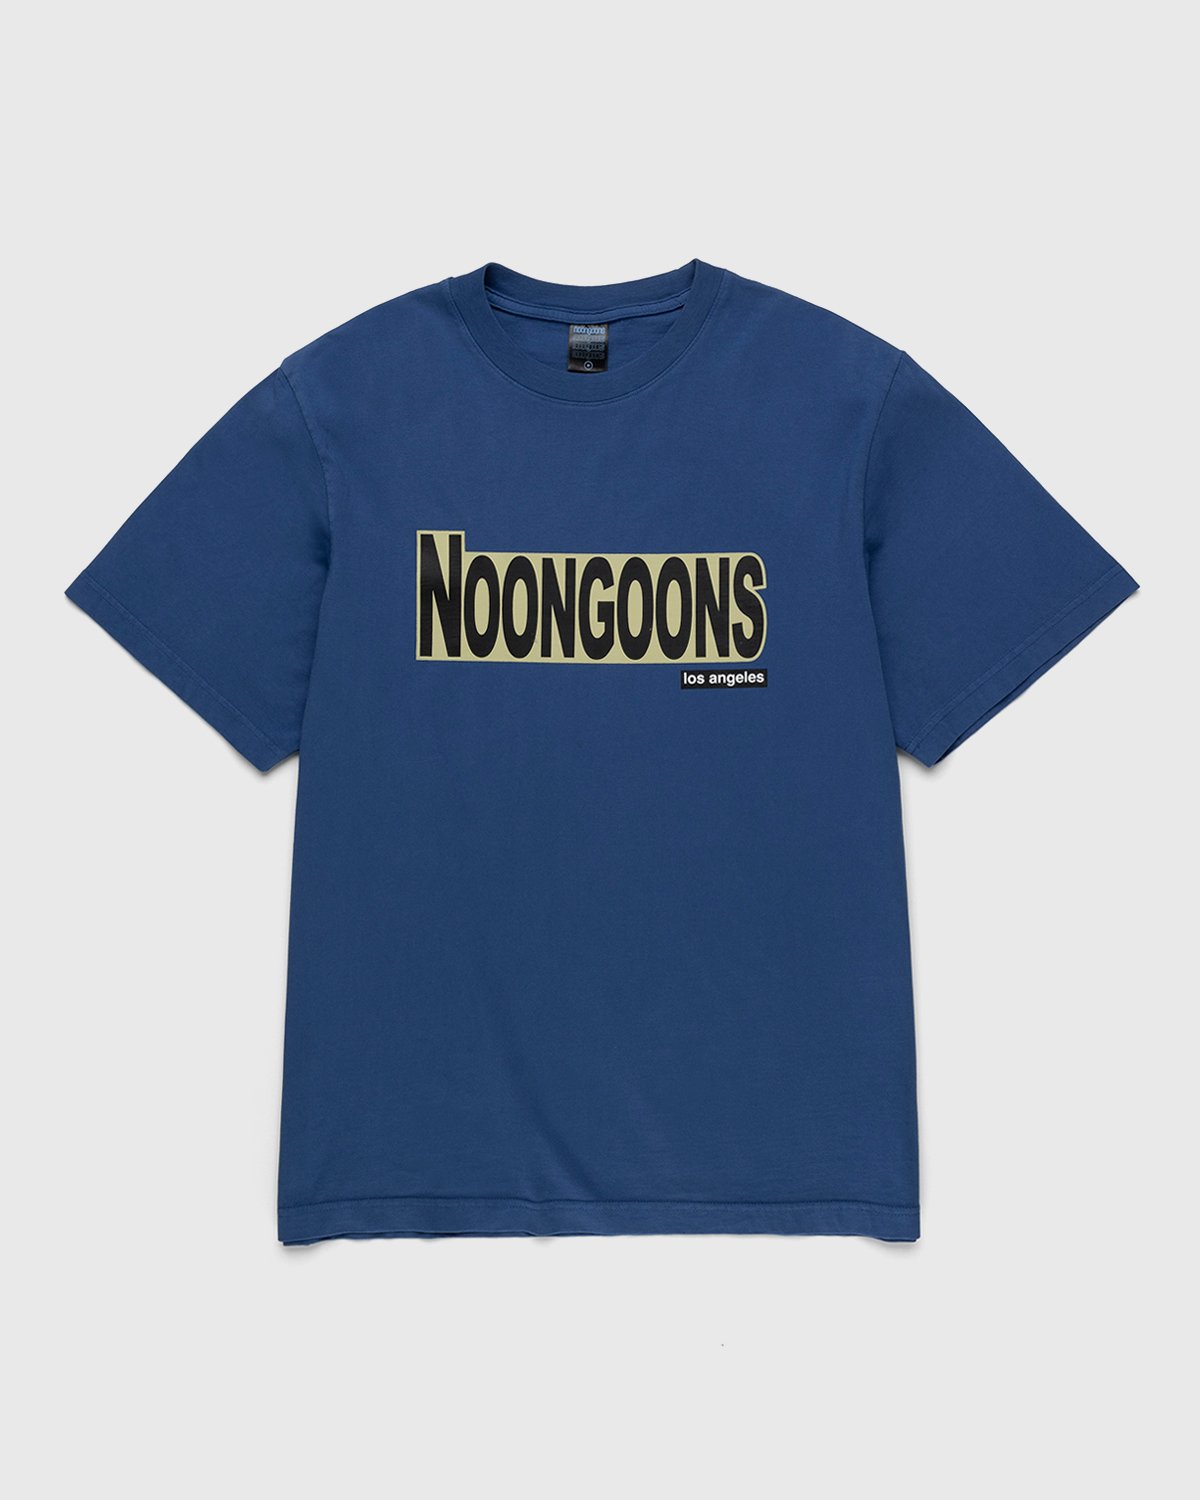 Noon Goons - My Block Tshirt Navy - Clothing - Blue - Image 1